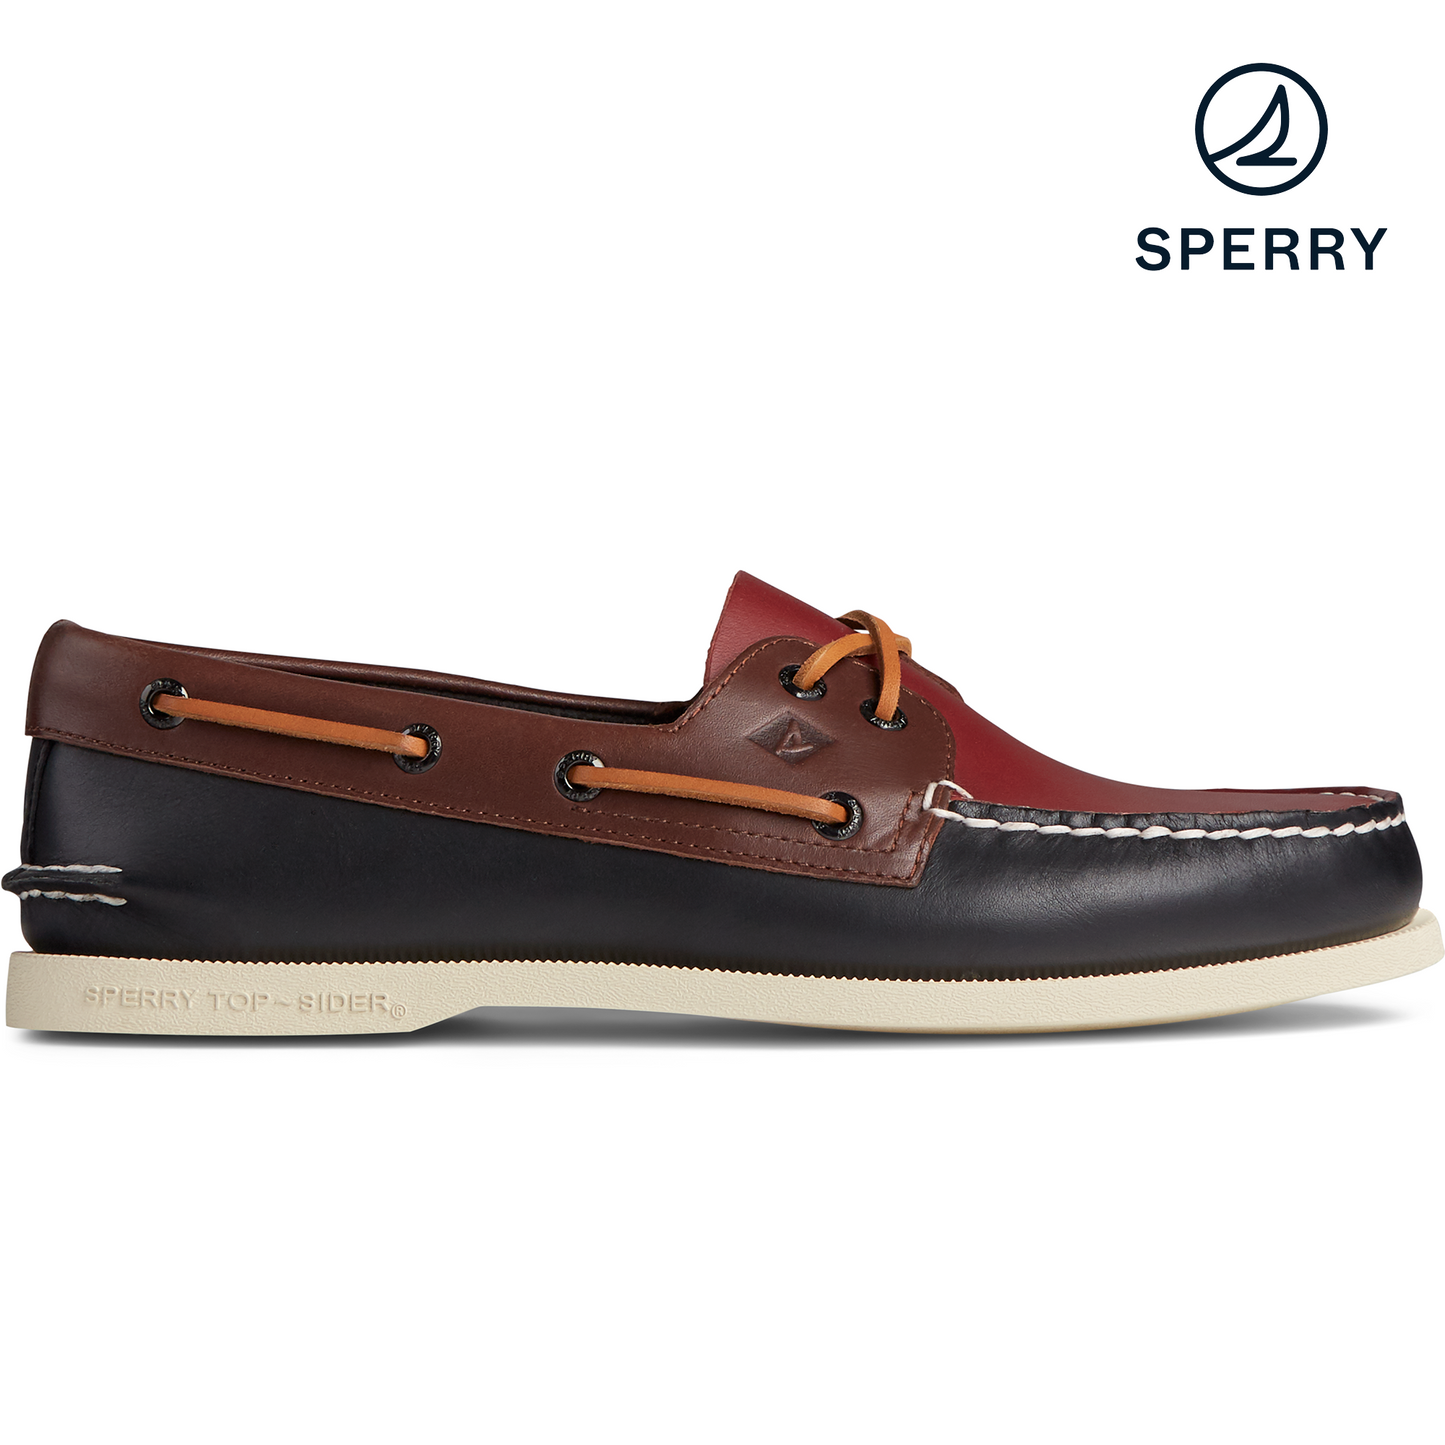 Sperry Men's Authentic Original Tri-Tone Boat Shoe - Black/Burgundy (STS22675)